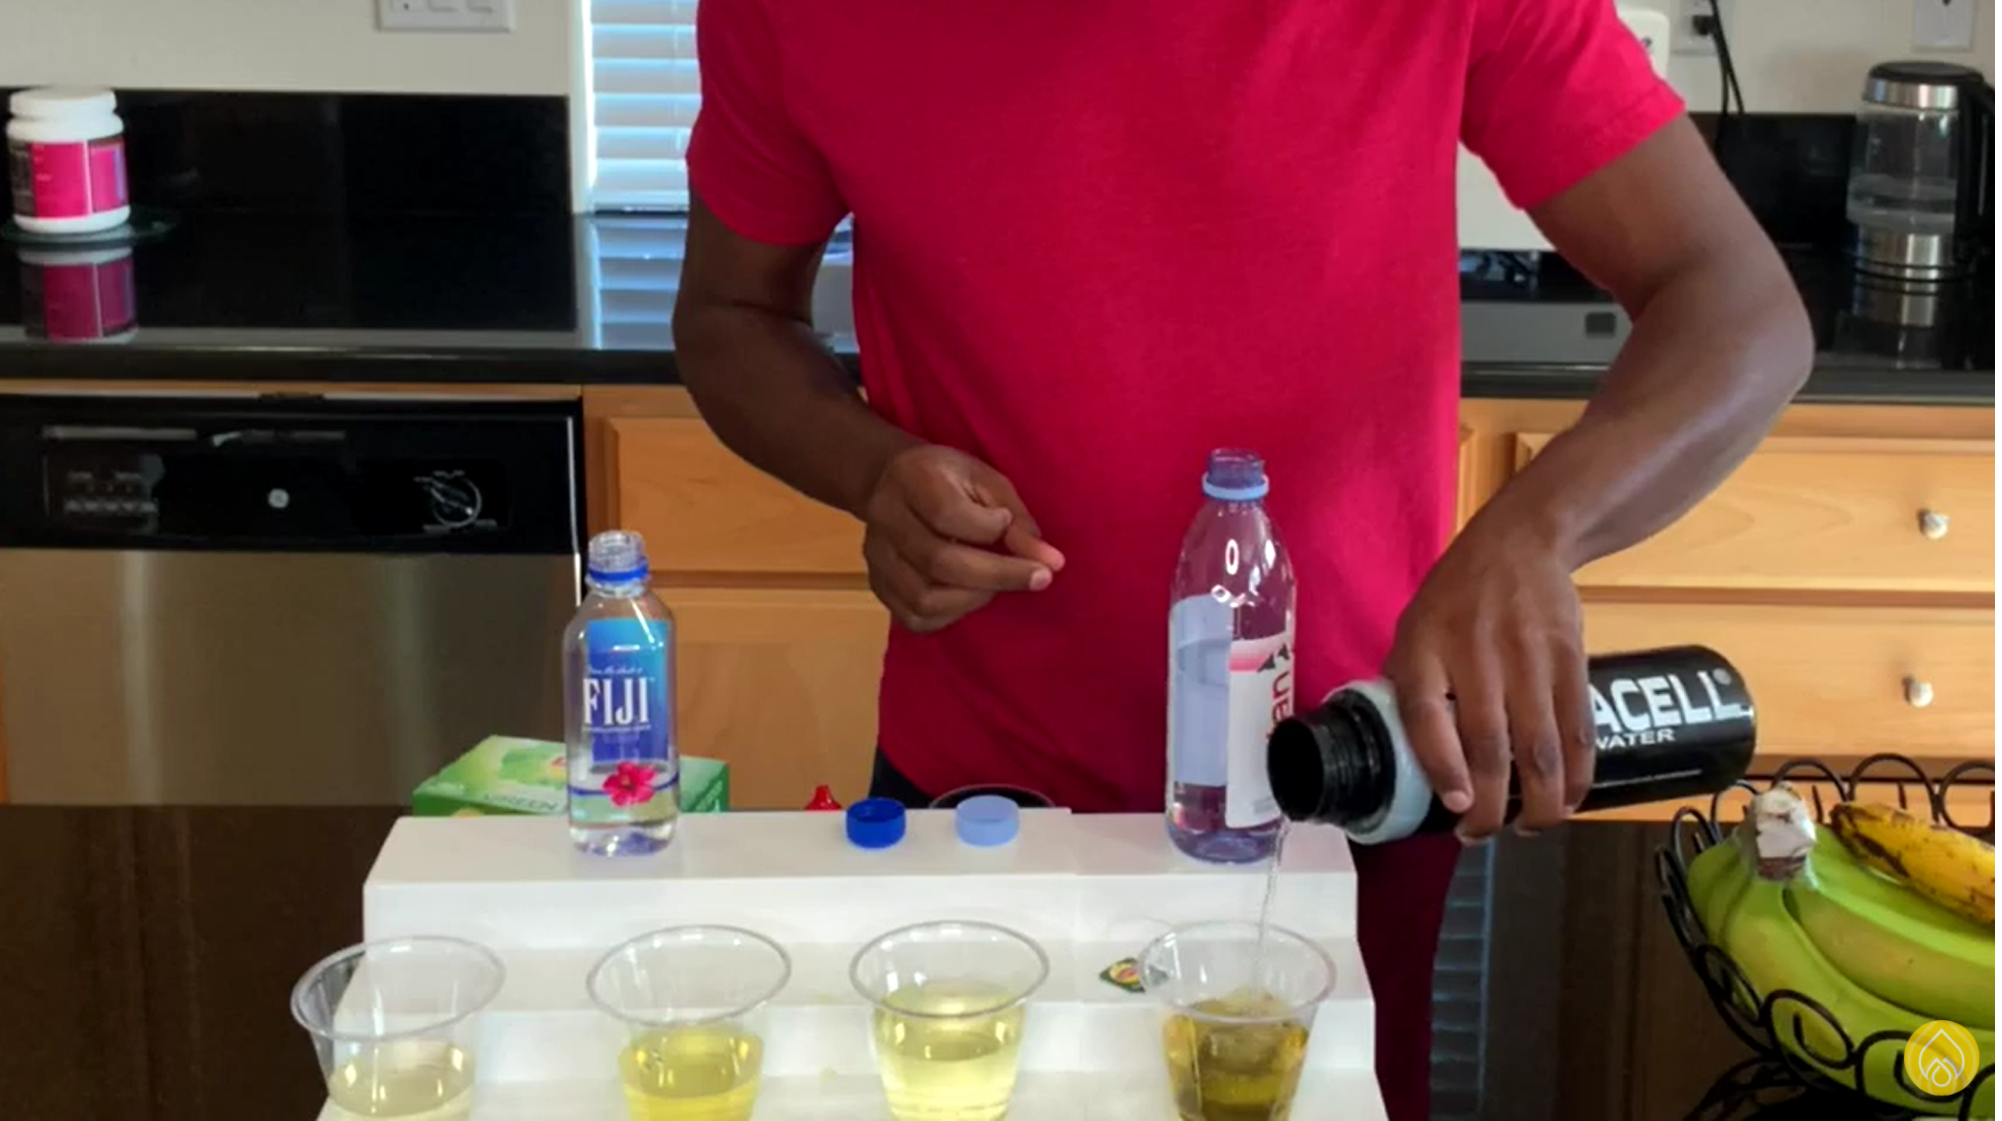 fiji water or evian hydration test